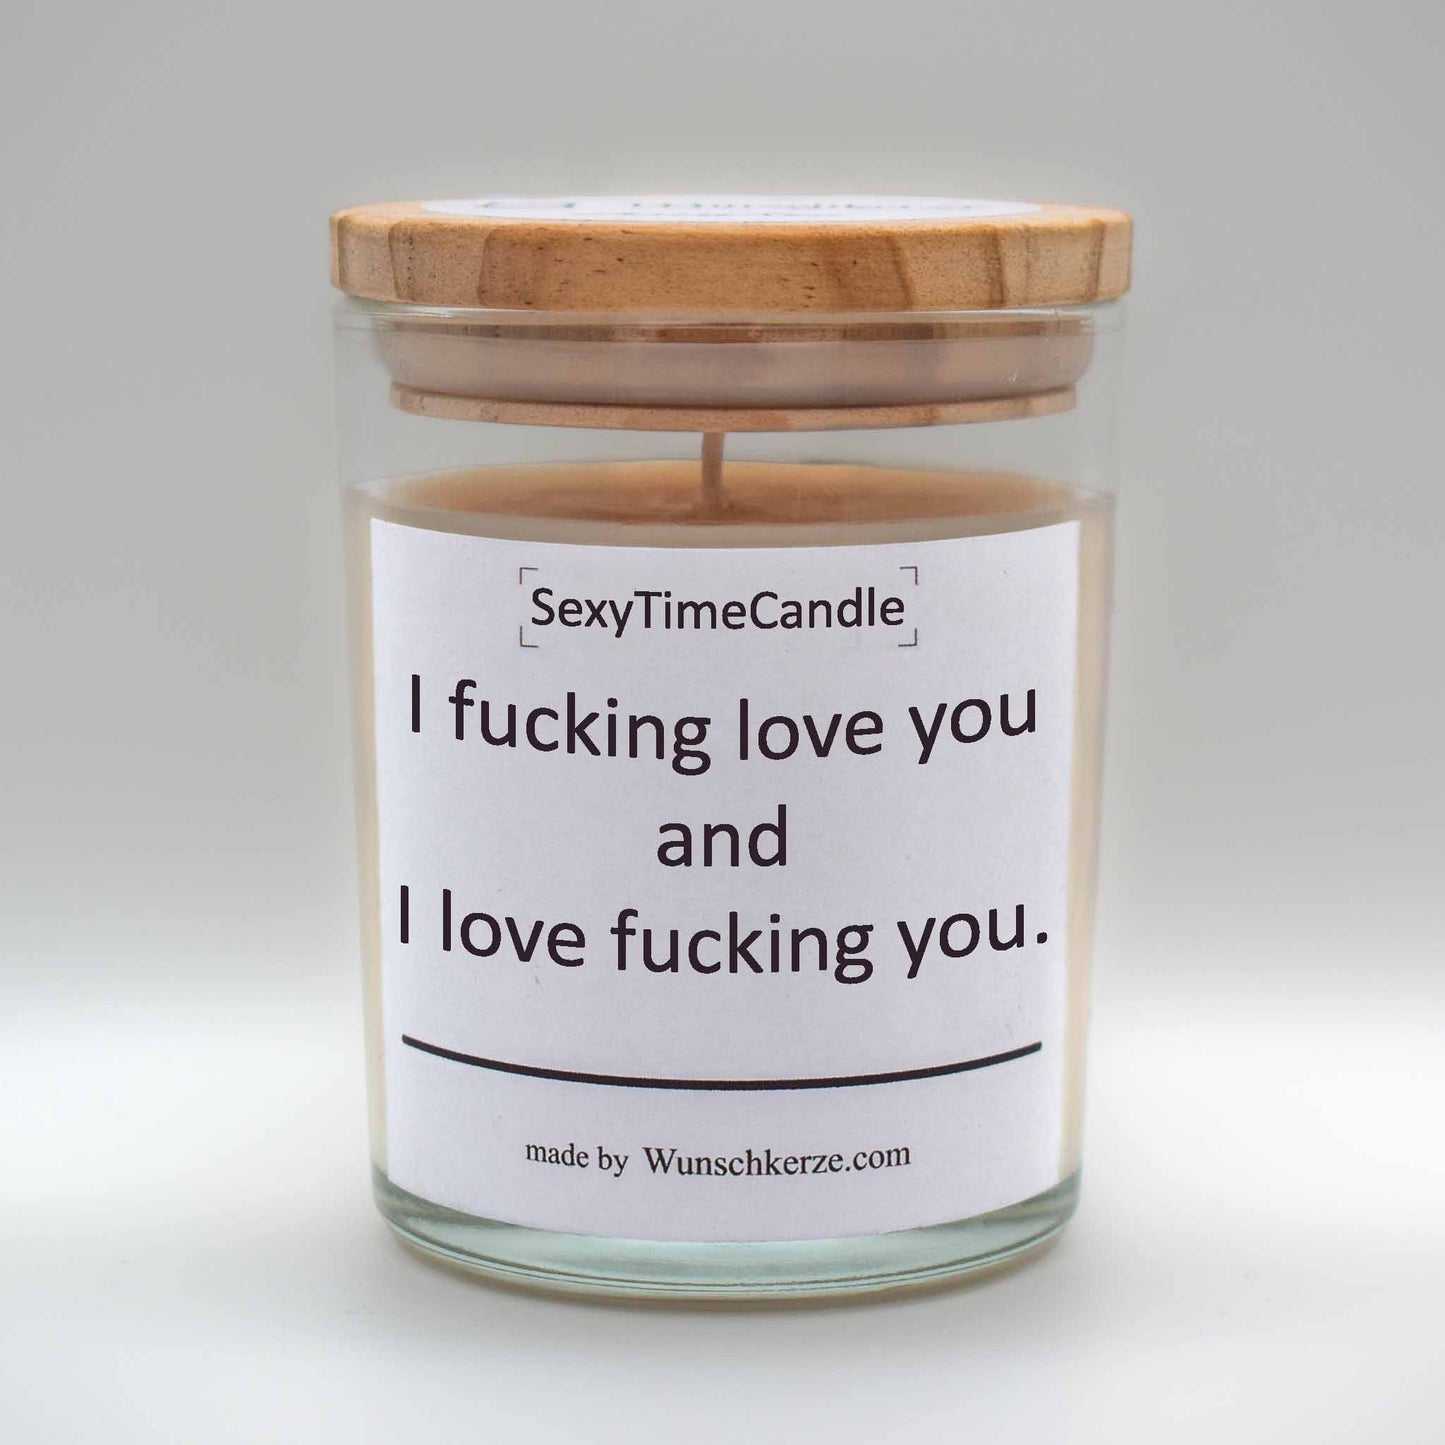 SexyTimeCandle - I fucking love you and I love fucking you.